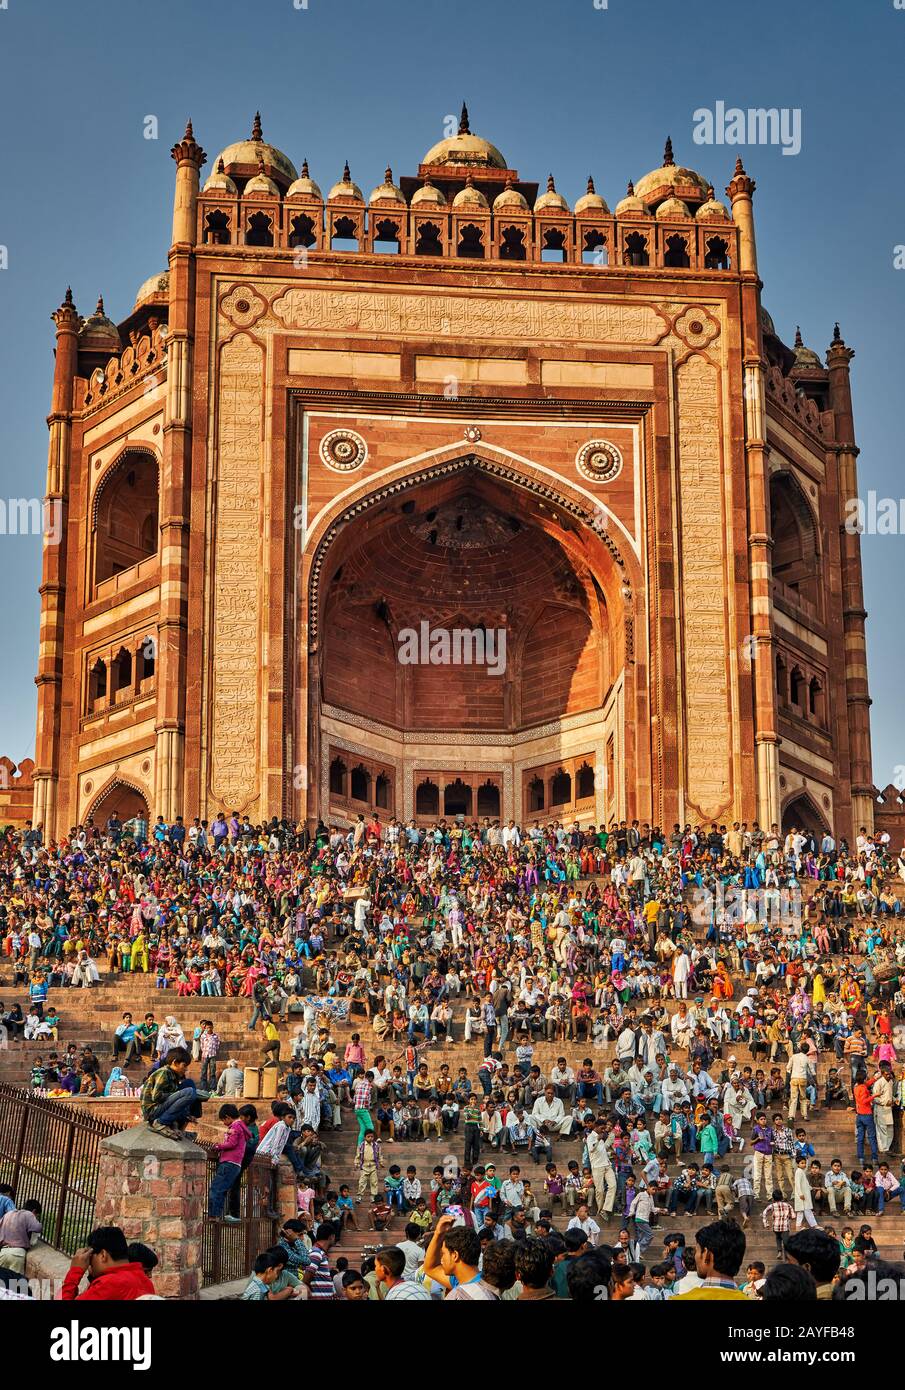 Riesige Menschenmenge in Buland Darwaza, dem 54 Meter hohen Eingang zum Fatehpur Sikri Complex, Fatehpur Sikri, Agra, Uttar Pradesh, Indien Stockfoto